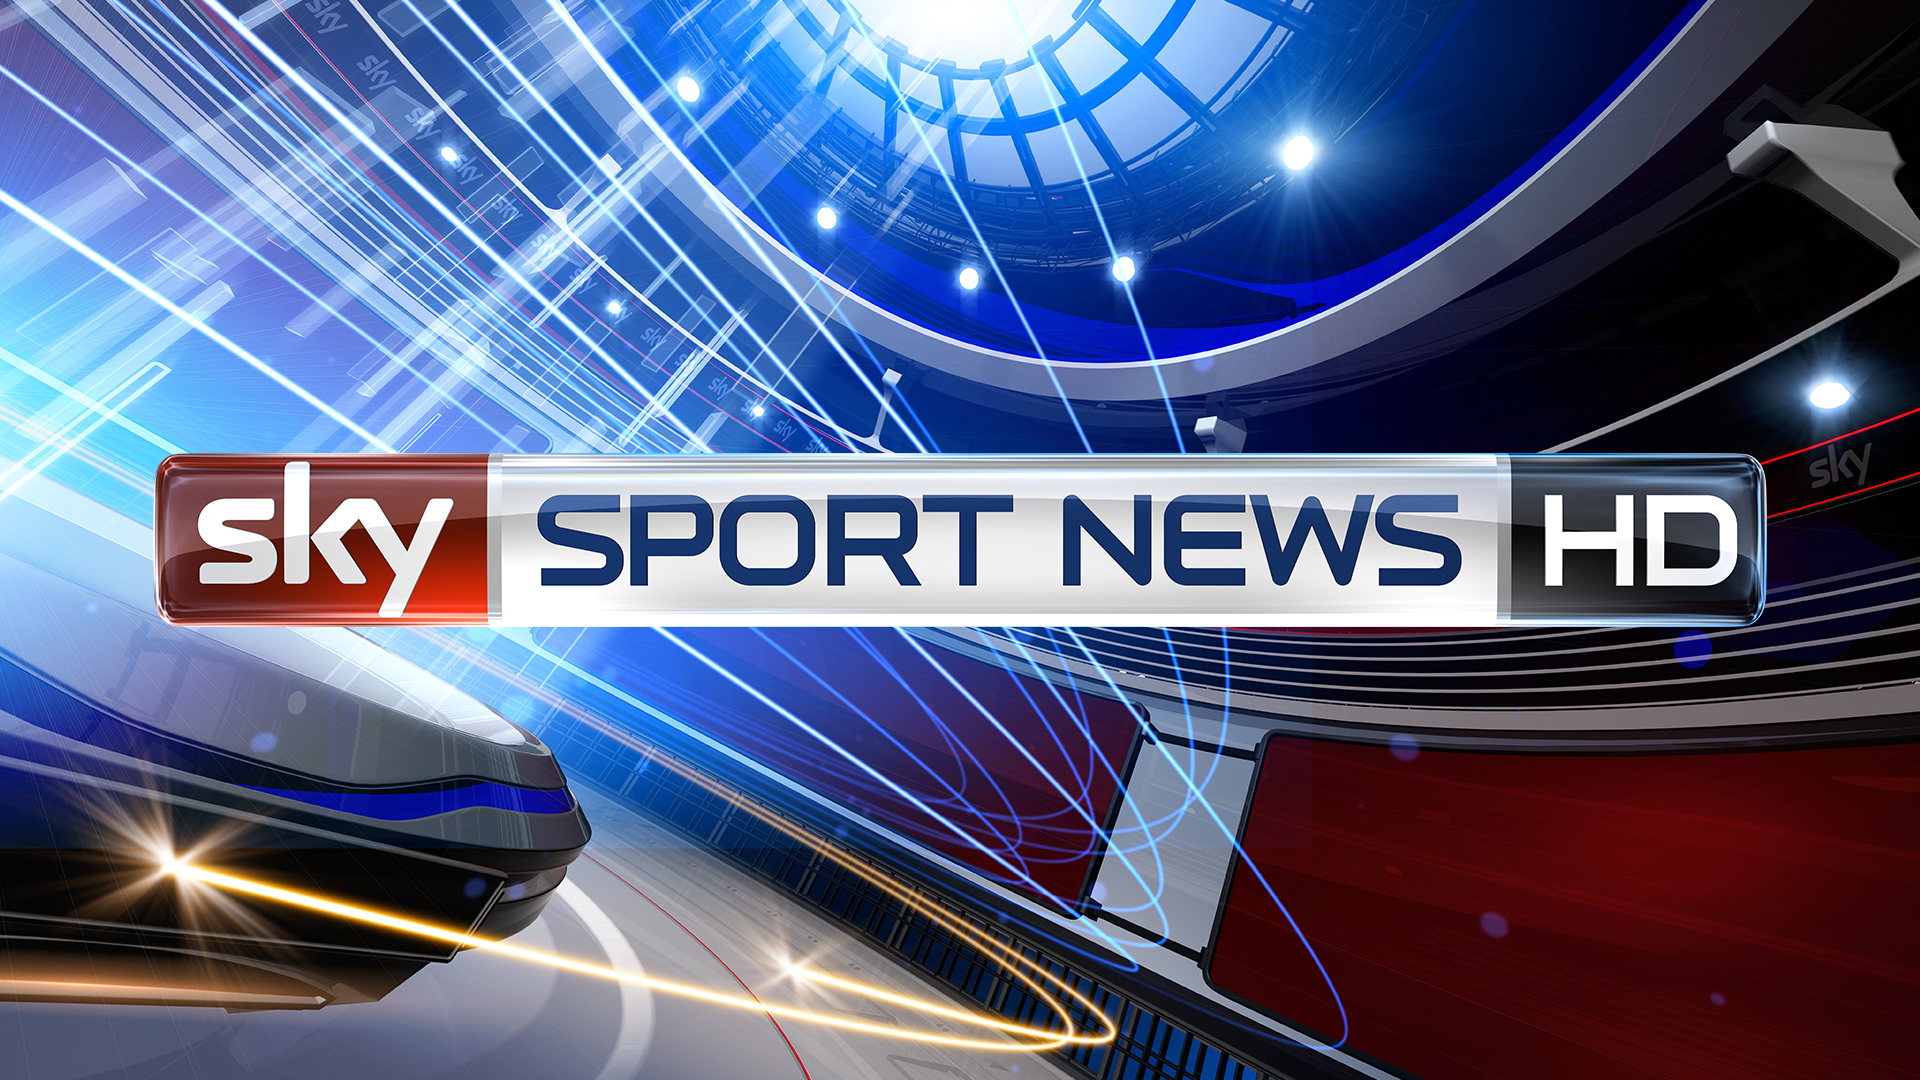 sky sports news hd live stream online free